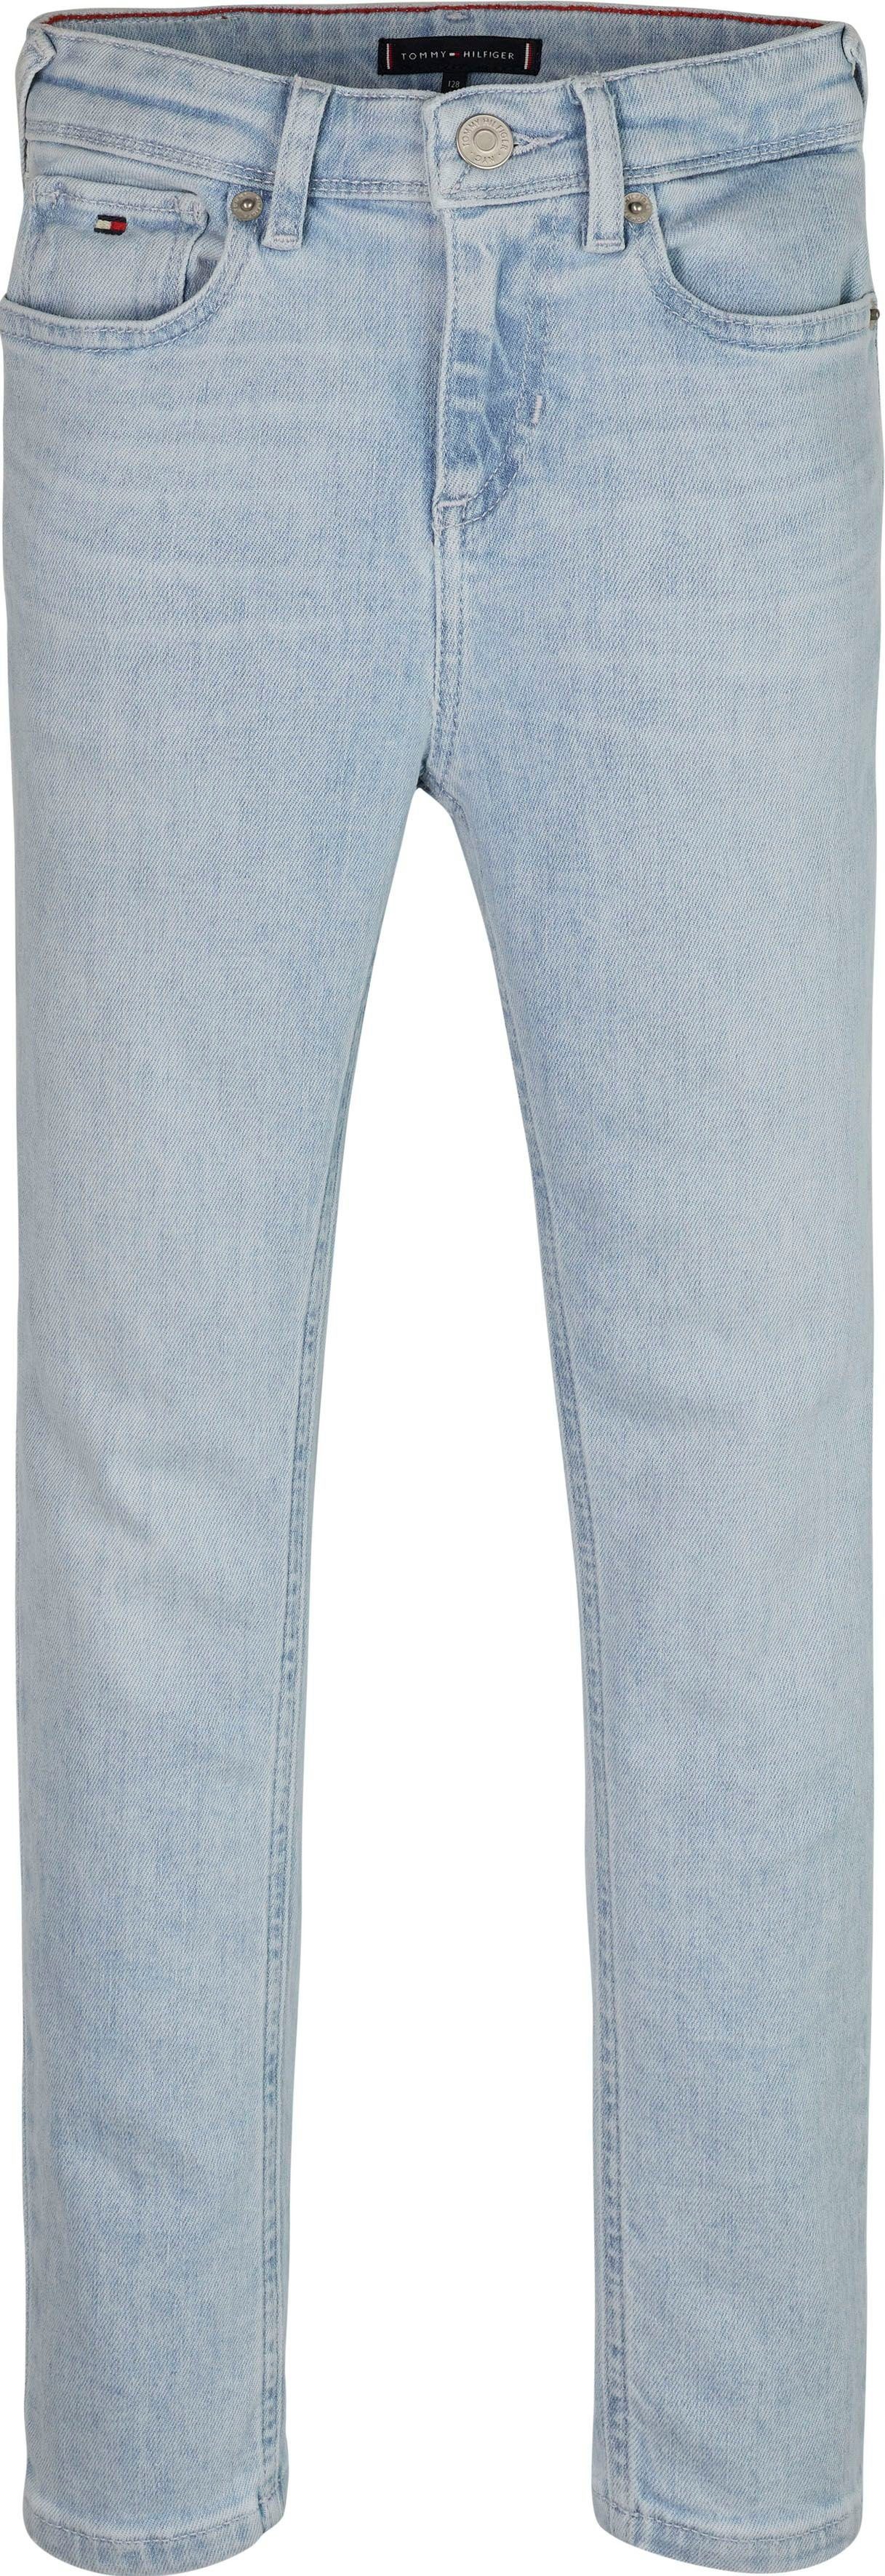 HEMP Y SCANTON Tommy Hilfiger 5-Pocket-Style LIGHT im Slim-fit-Jeans